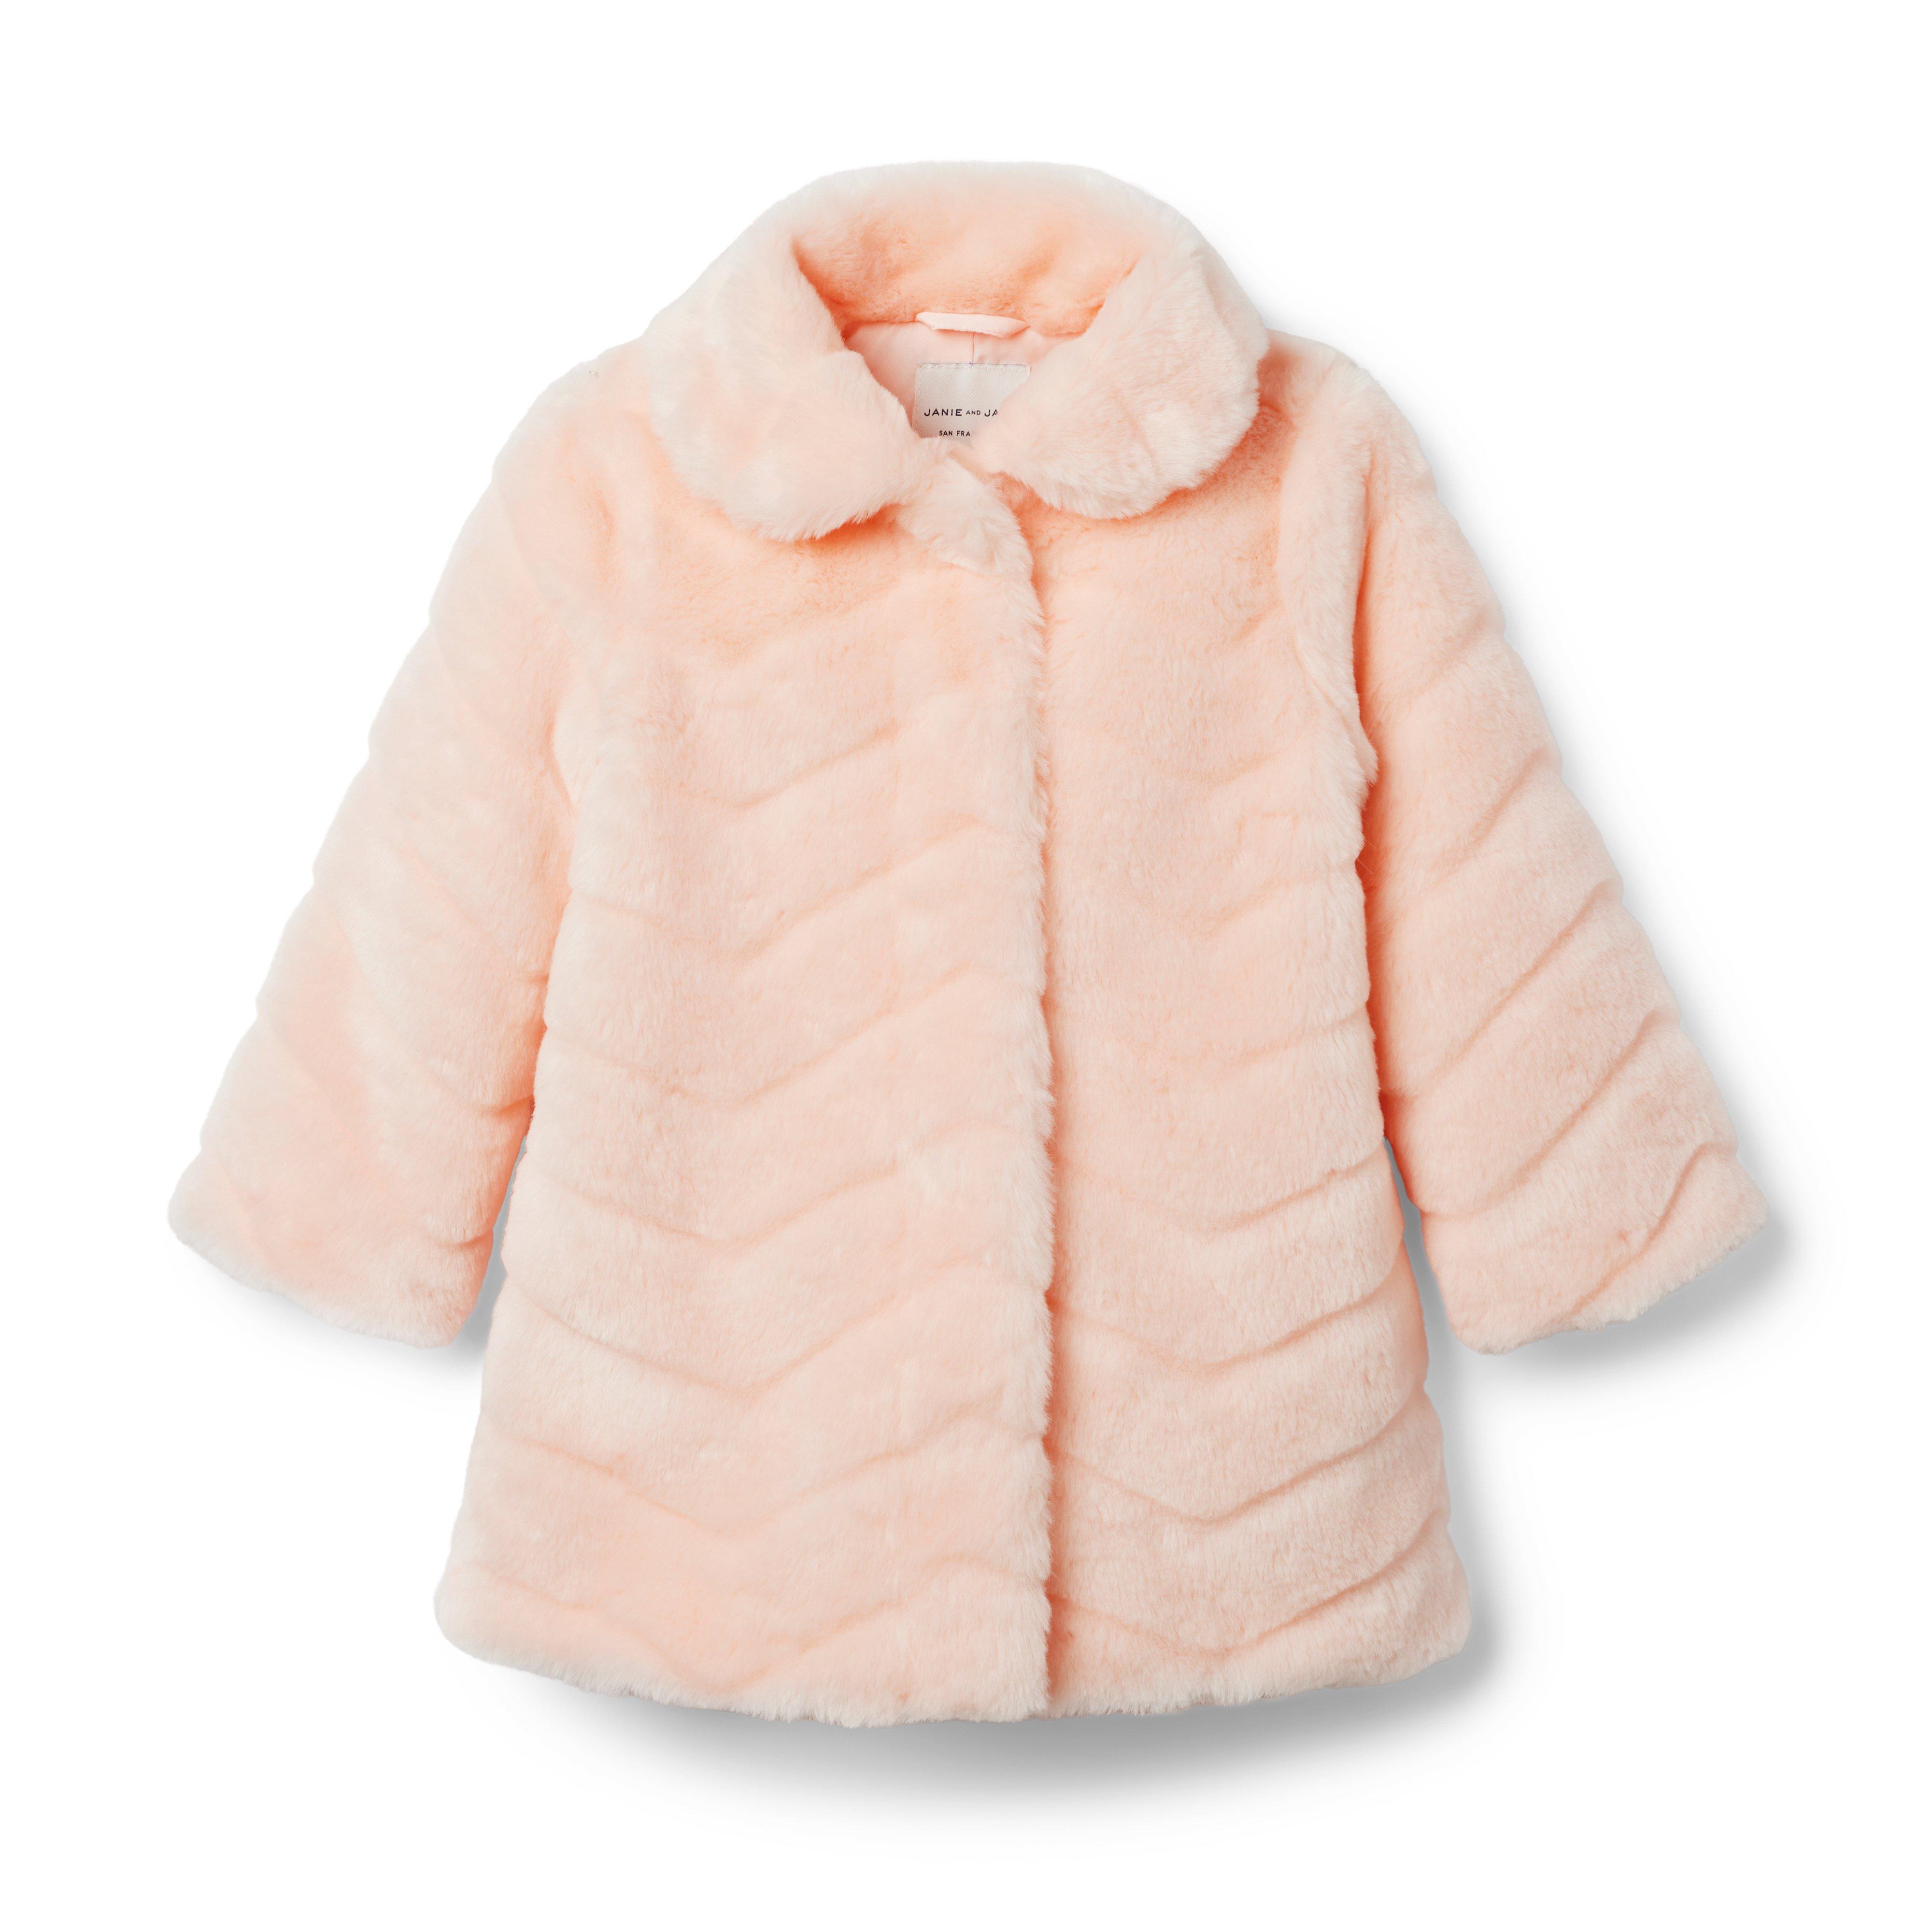 The Luxe Faux Fur Coat